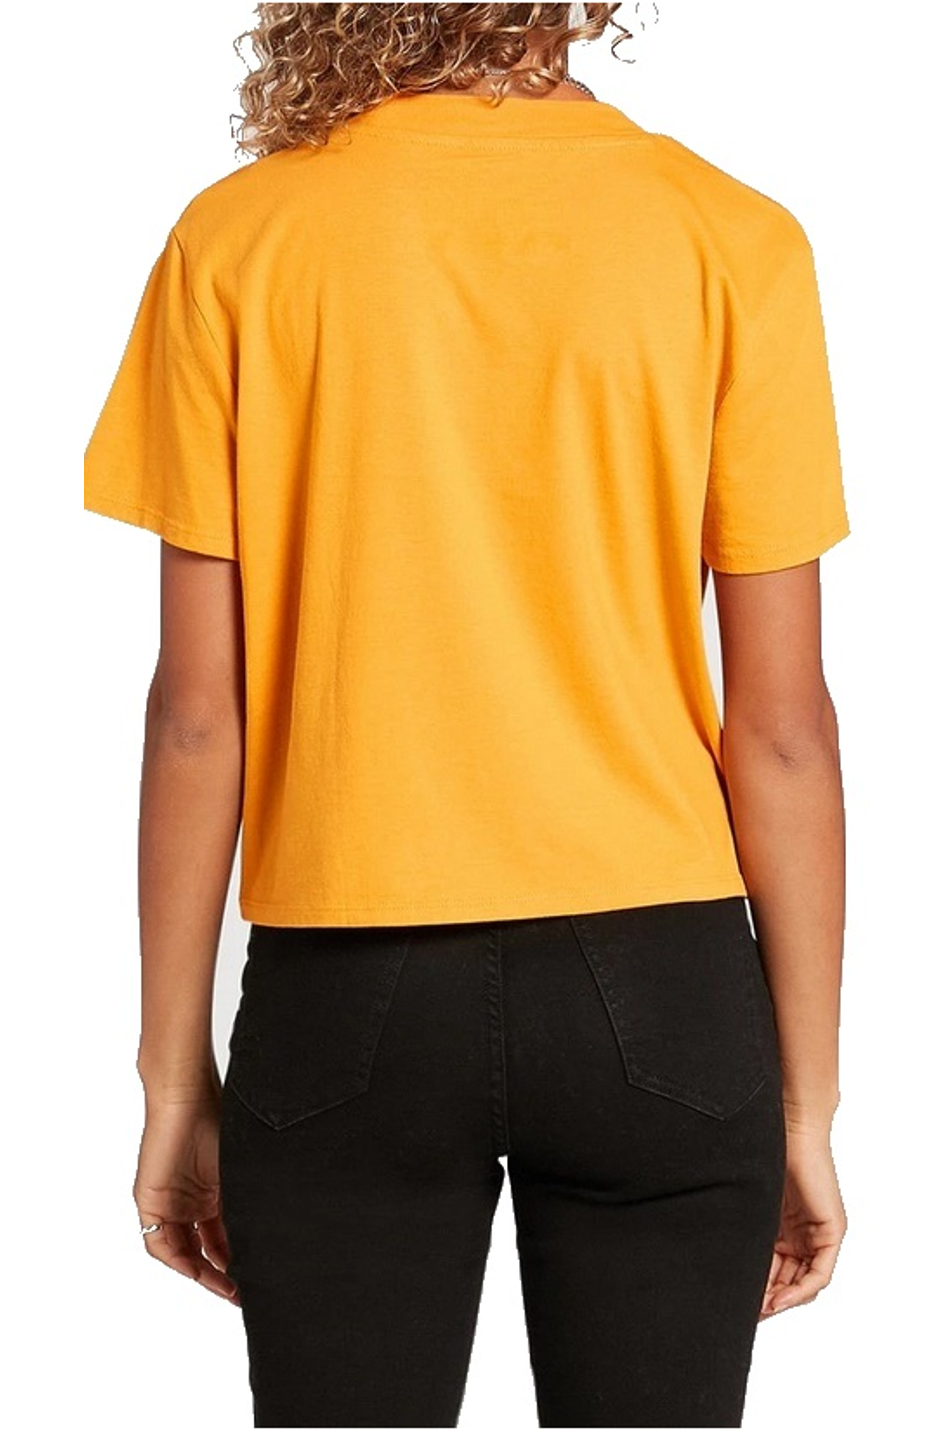 Volcom Damen Shirt Pocket Dial gelb